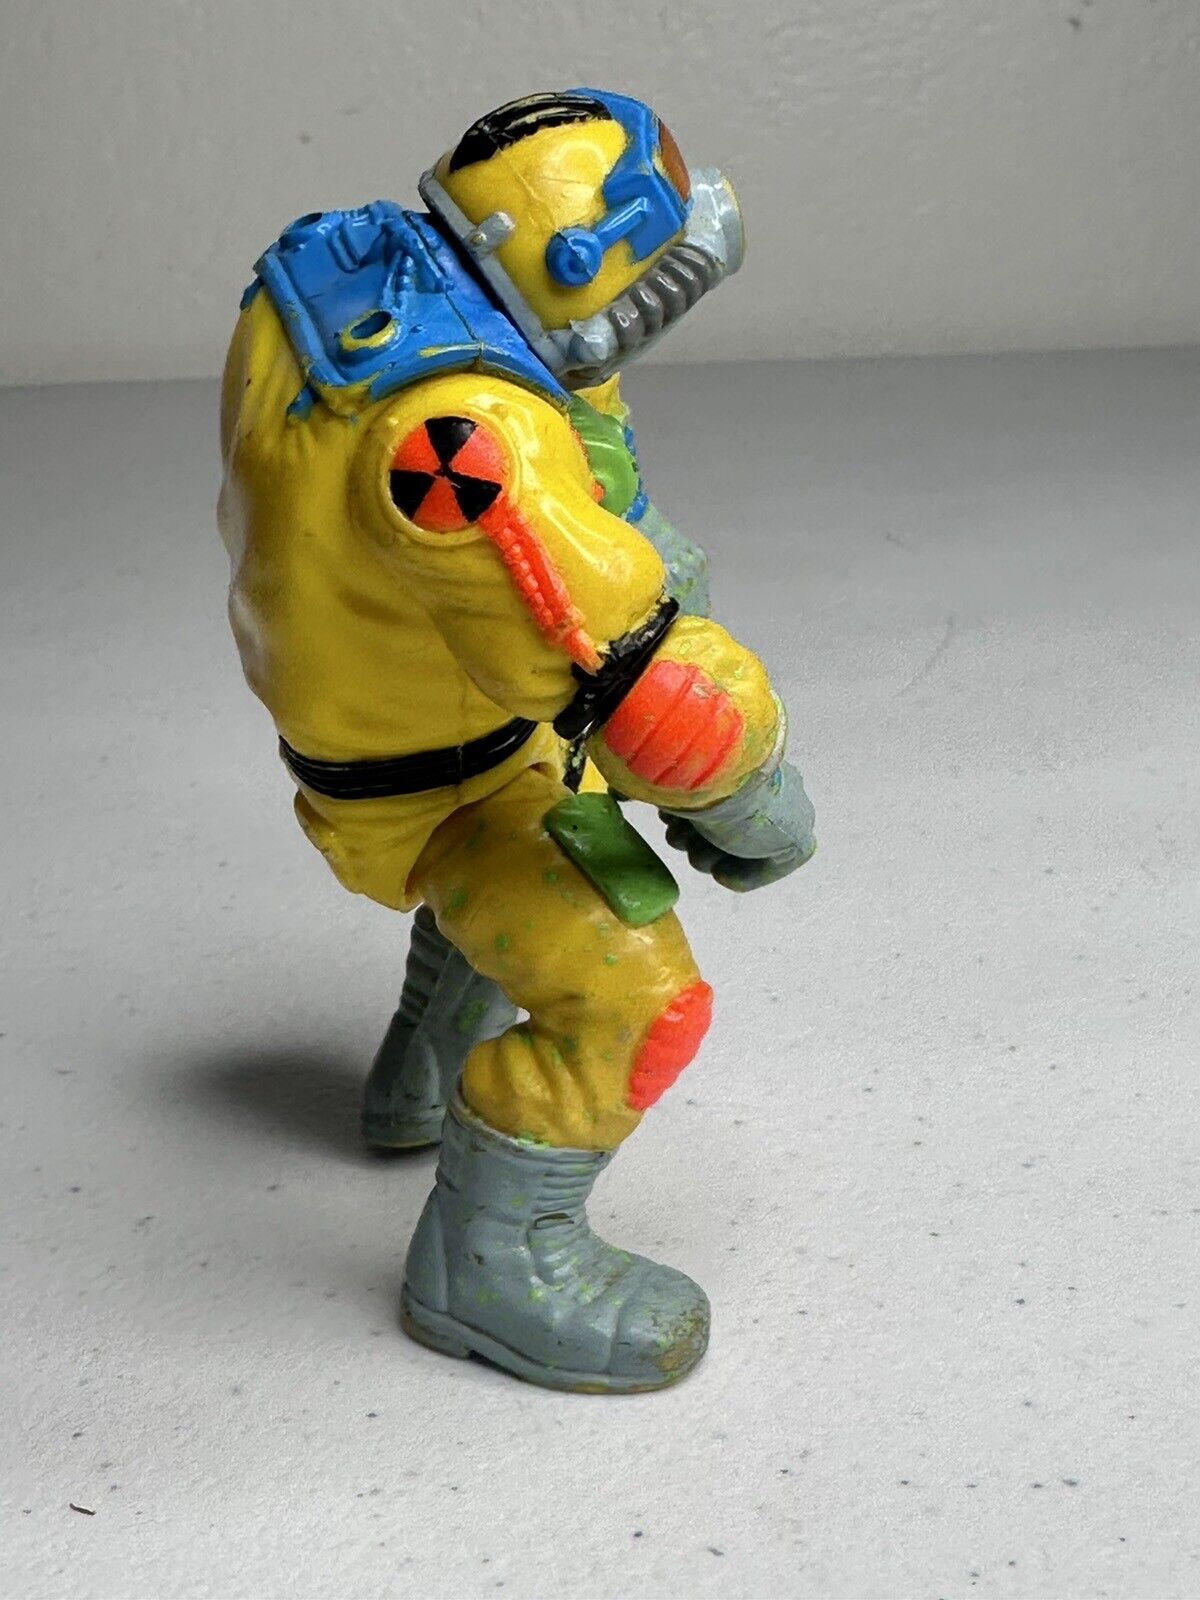 Classic 1991 Playmates Toxic Crusaders Radiation Ranger Figure - Vintage Eco-Hero Collectible - TreasuTiques